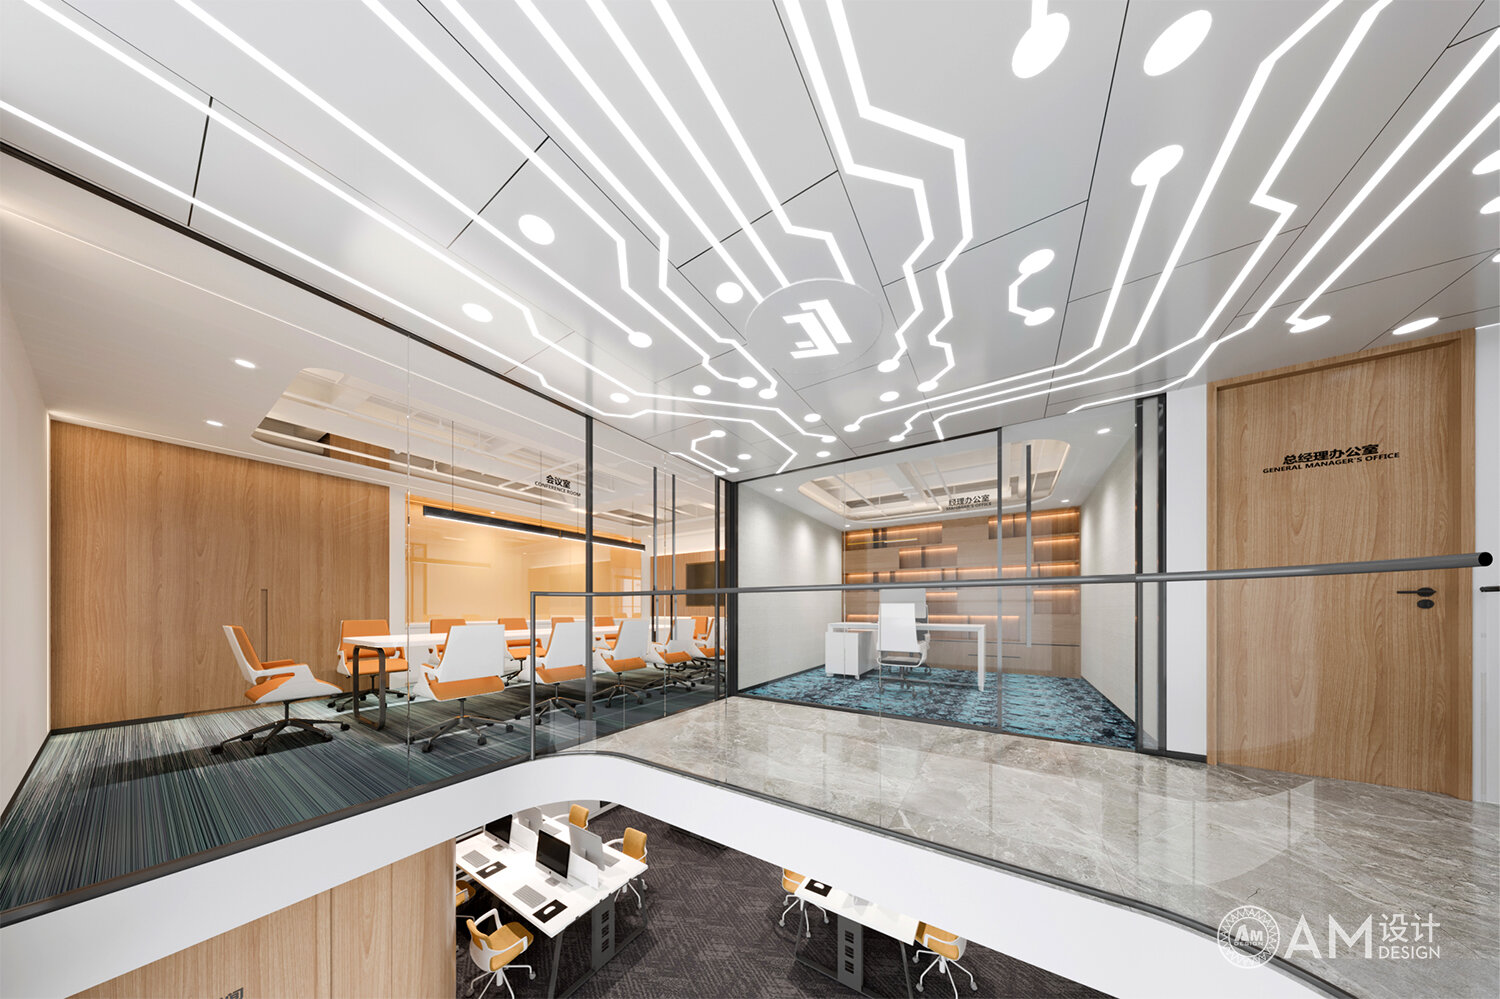 AM DESIGN | Office design of Beijing Jianling Siyu Technology Company